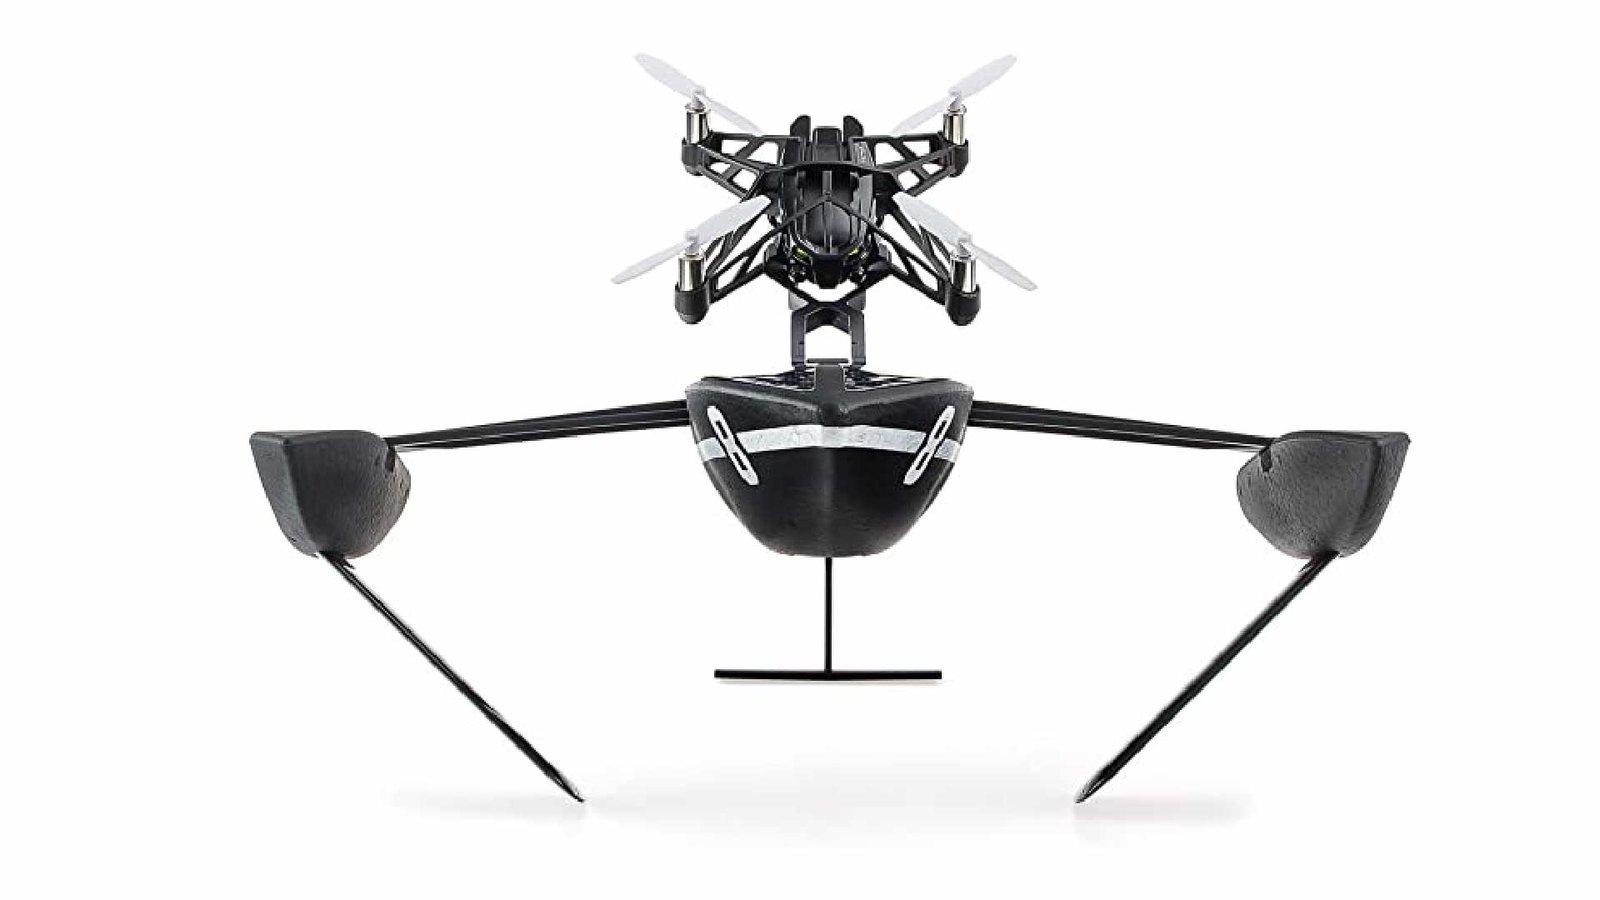 Parrot Hydrofoil Mini drone